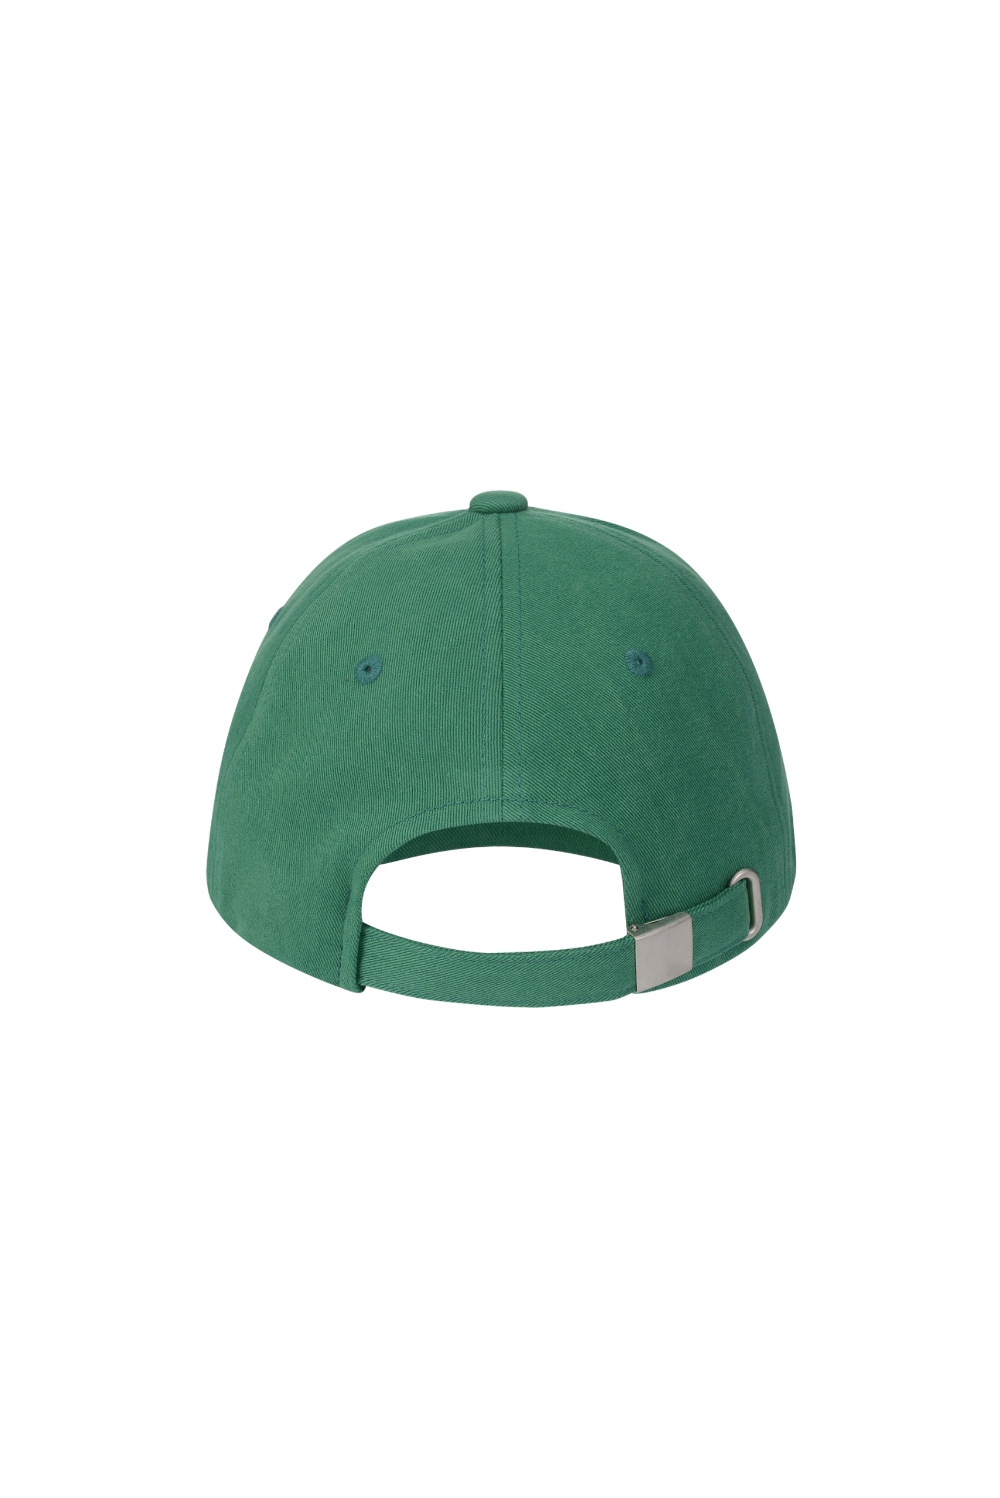 hat green color image-S1L41